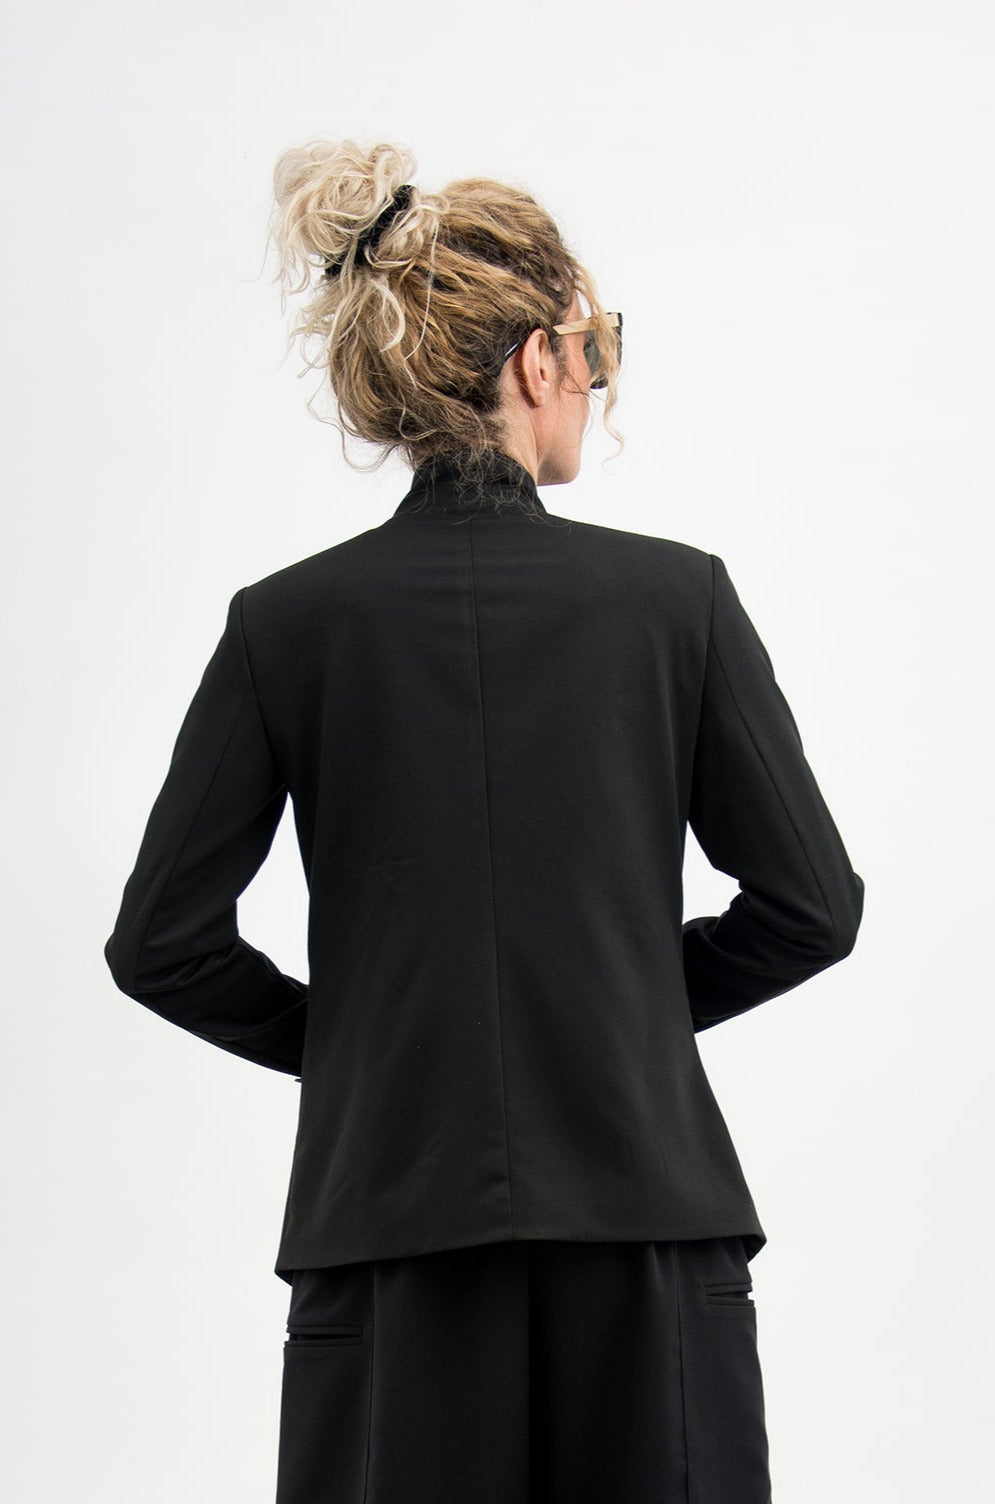 Asymmetrical Black Suit Jacket Women